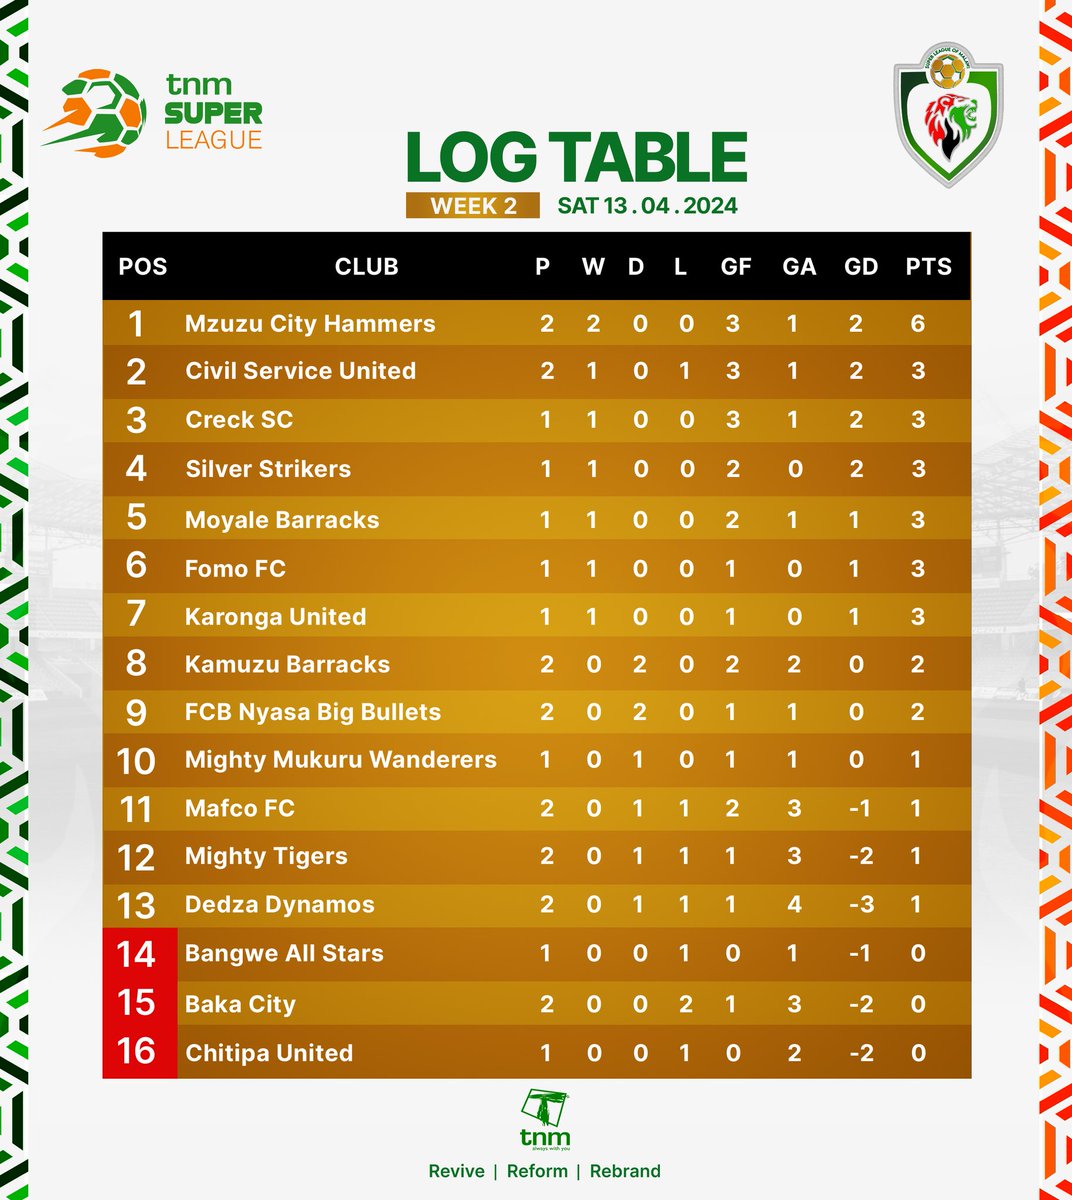 TNM Super league log table as at  13th April 2024.